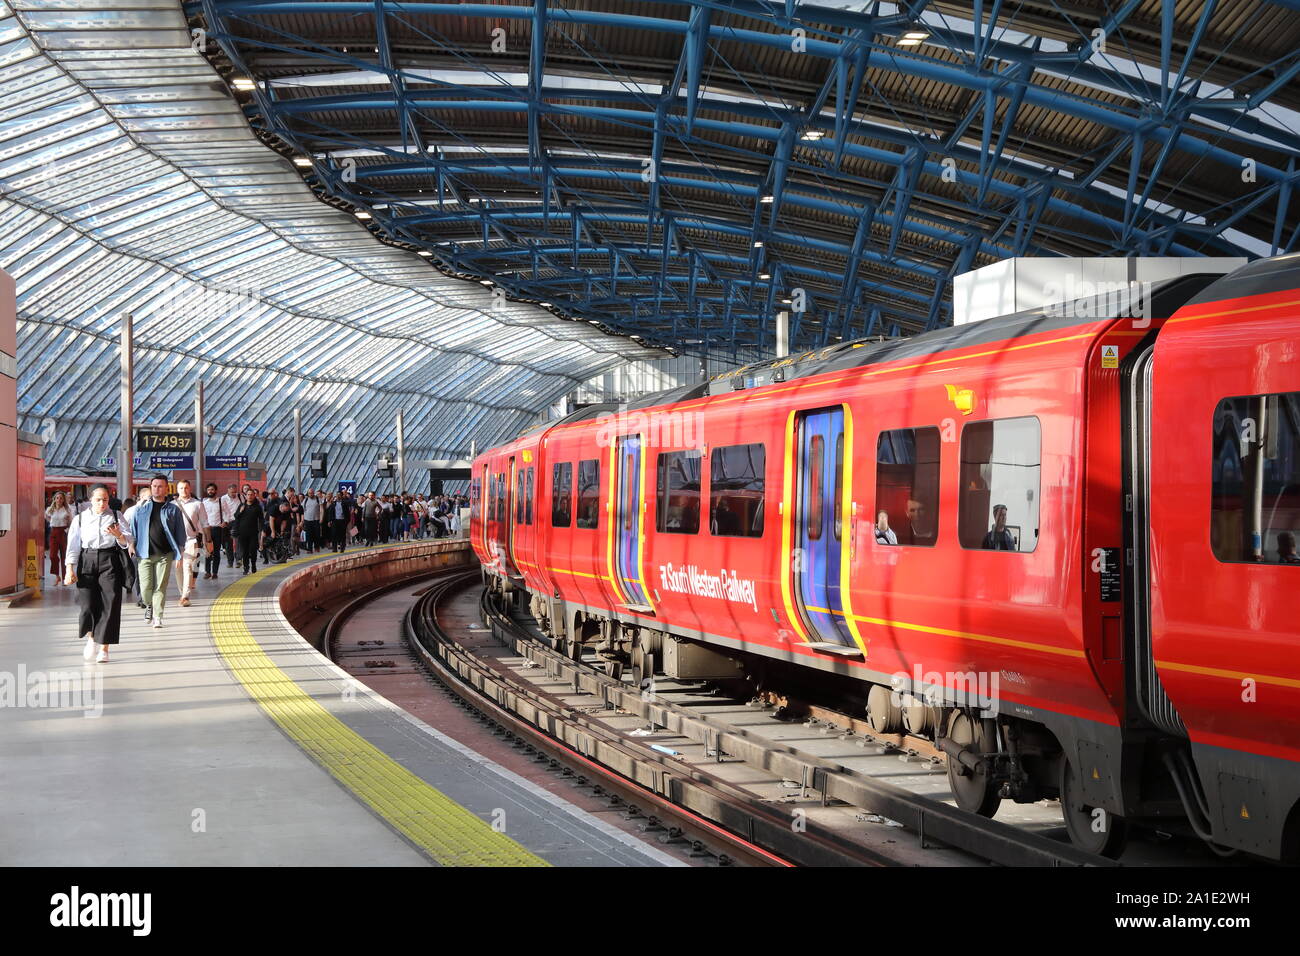 South Western am Bahnhof Waterloo Station in London, Großbritannien Stockfoto